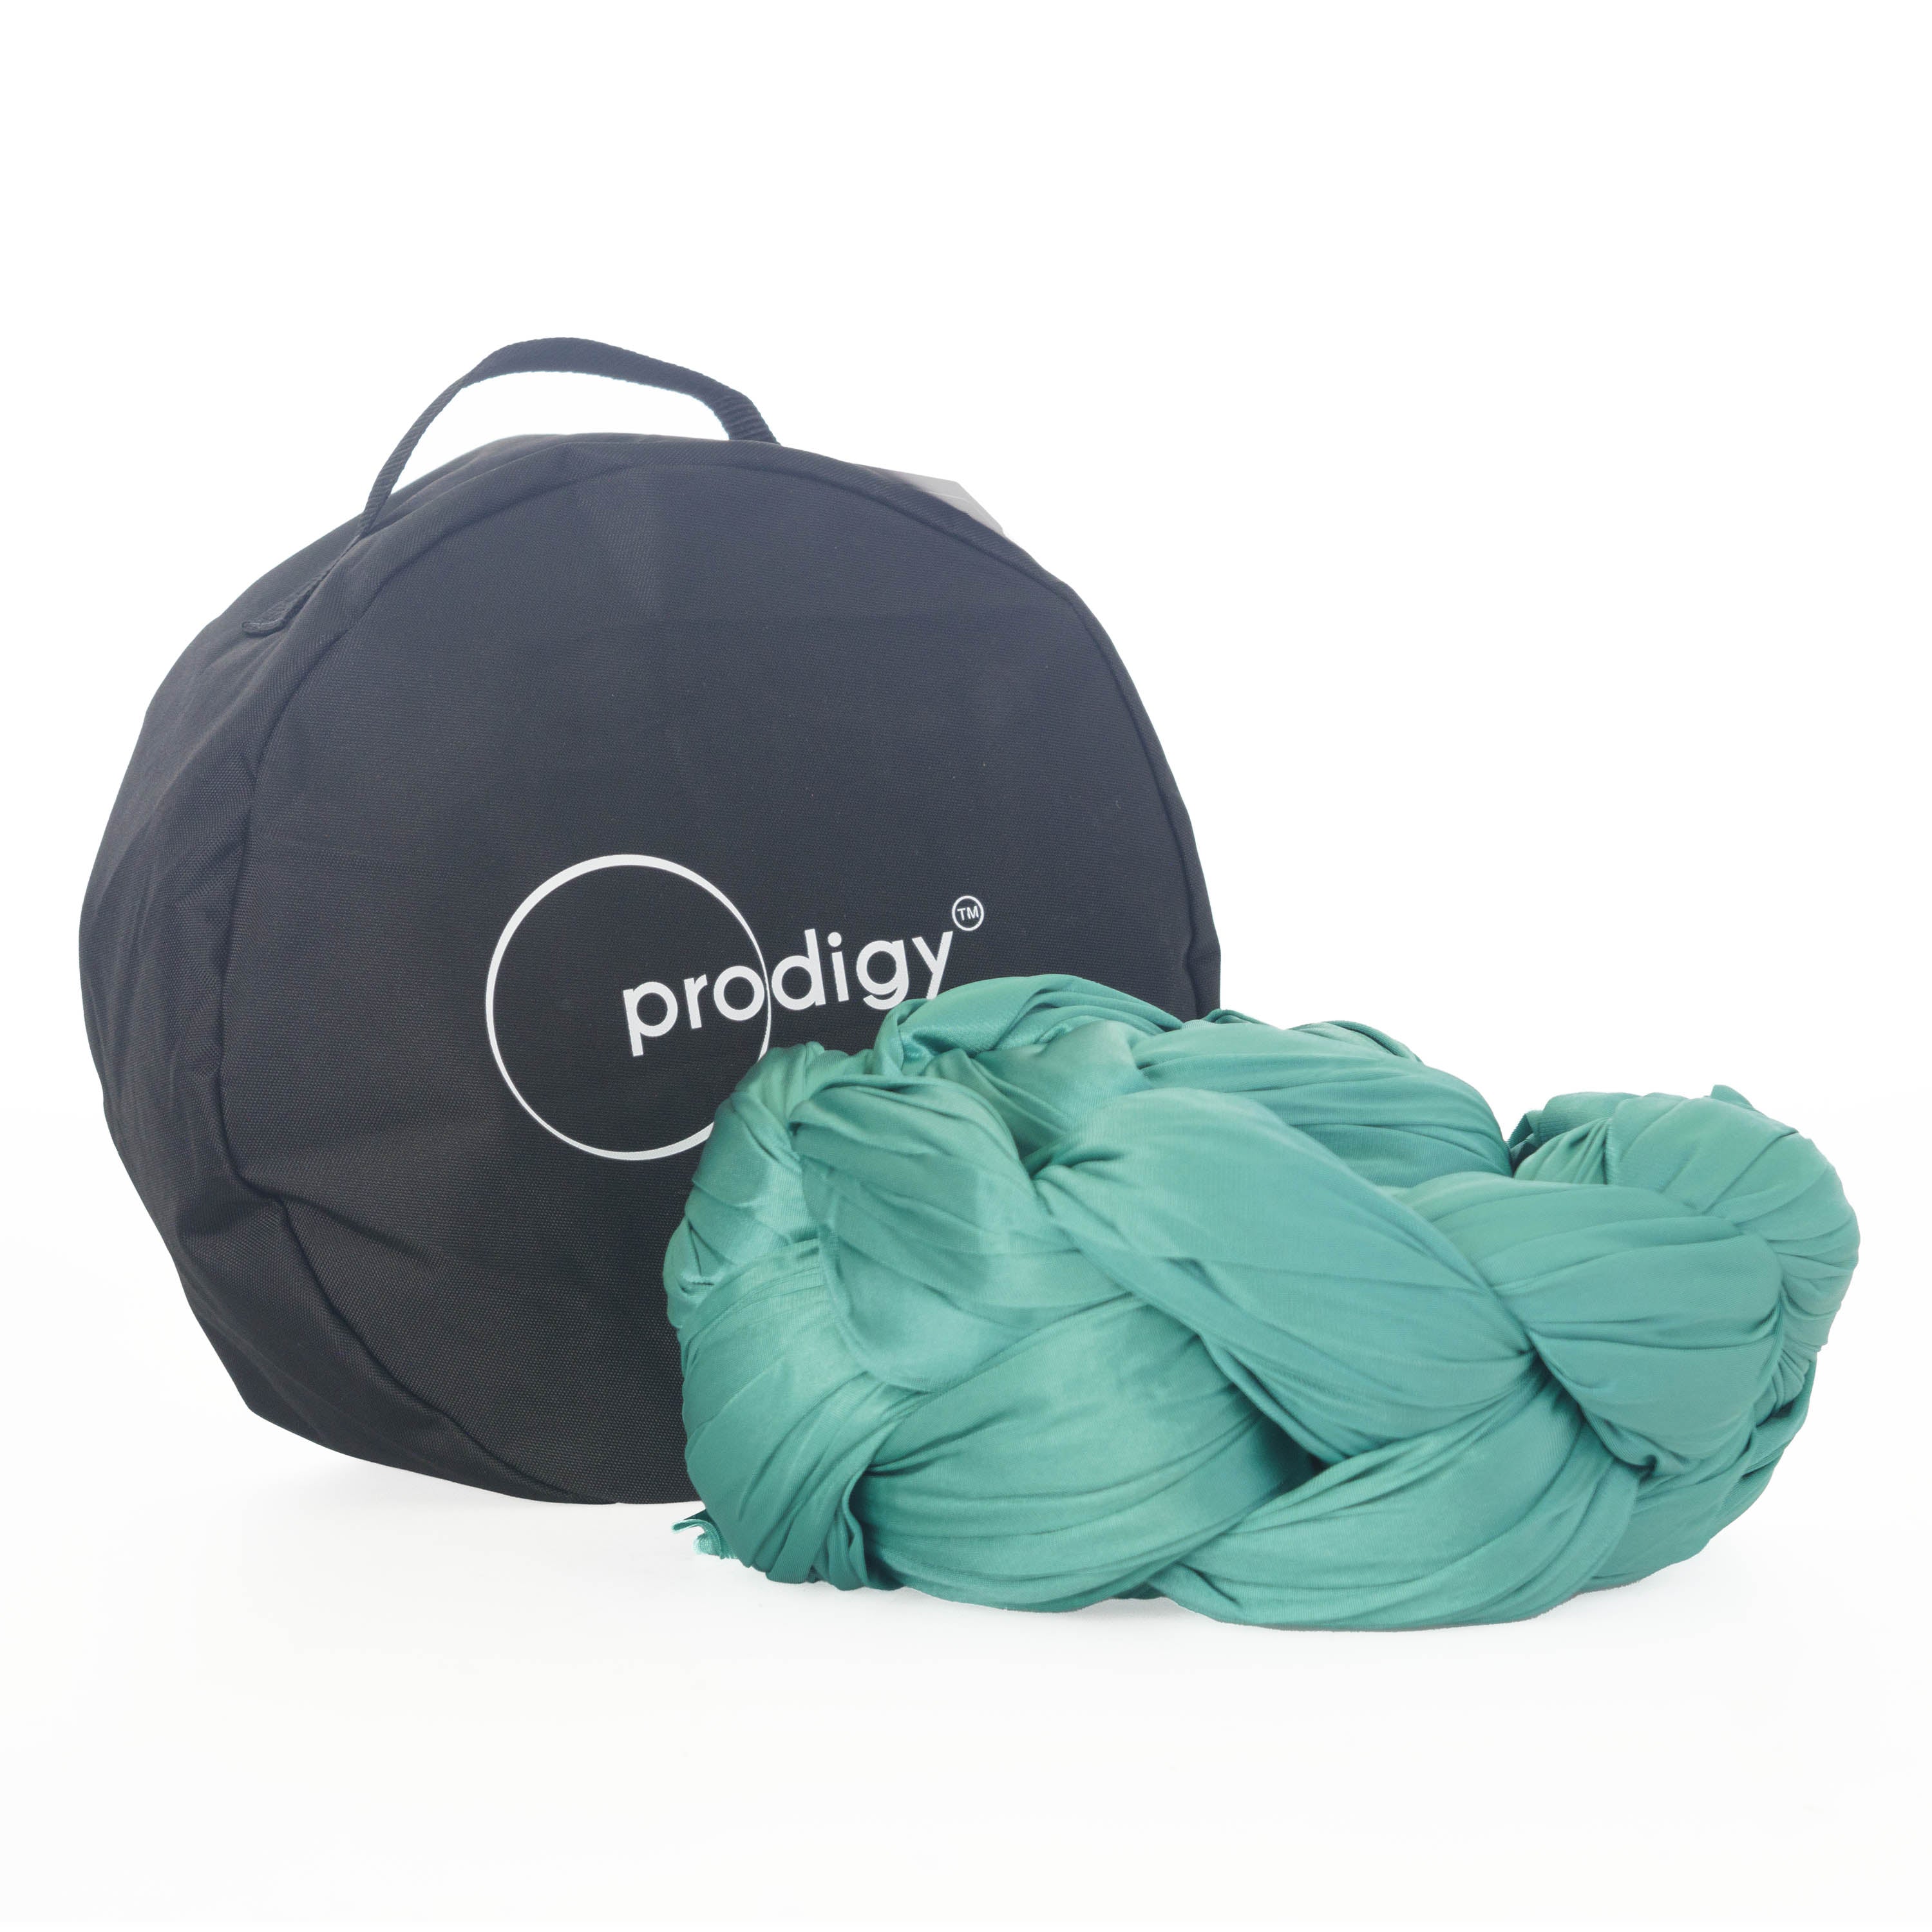 Jade Prodigy hammock tied next to bag